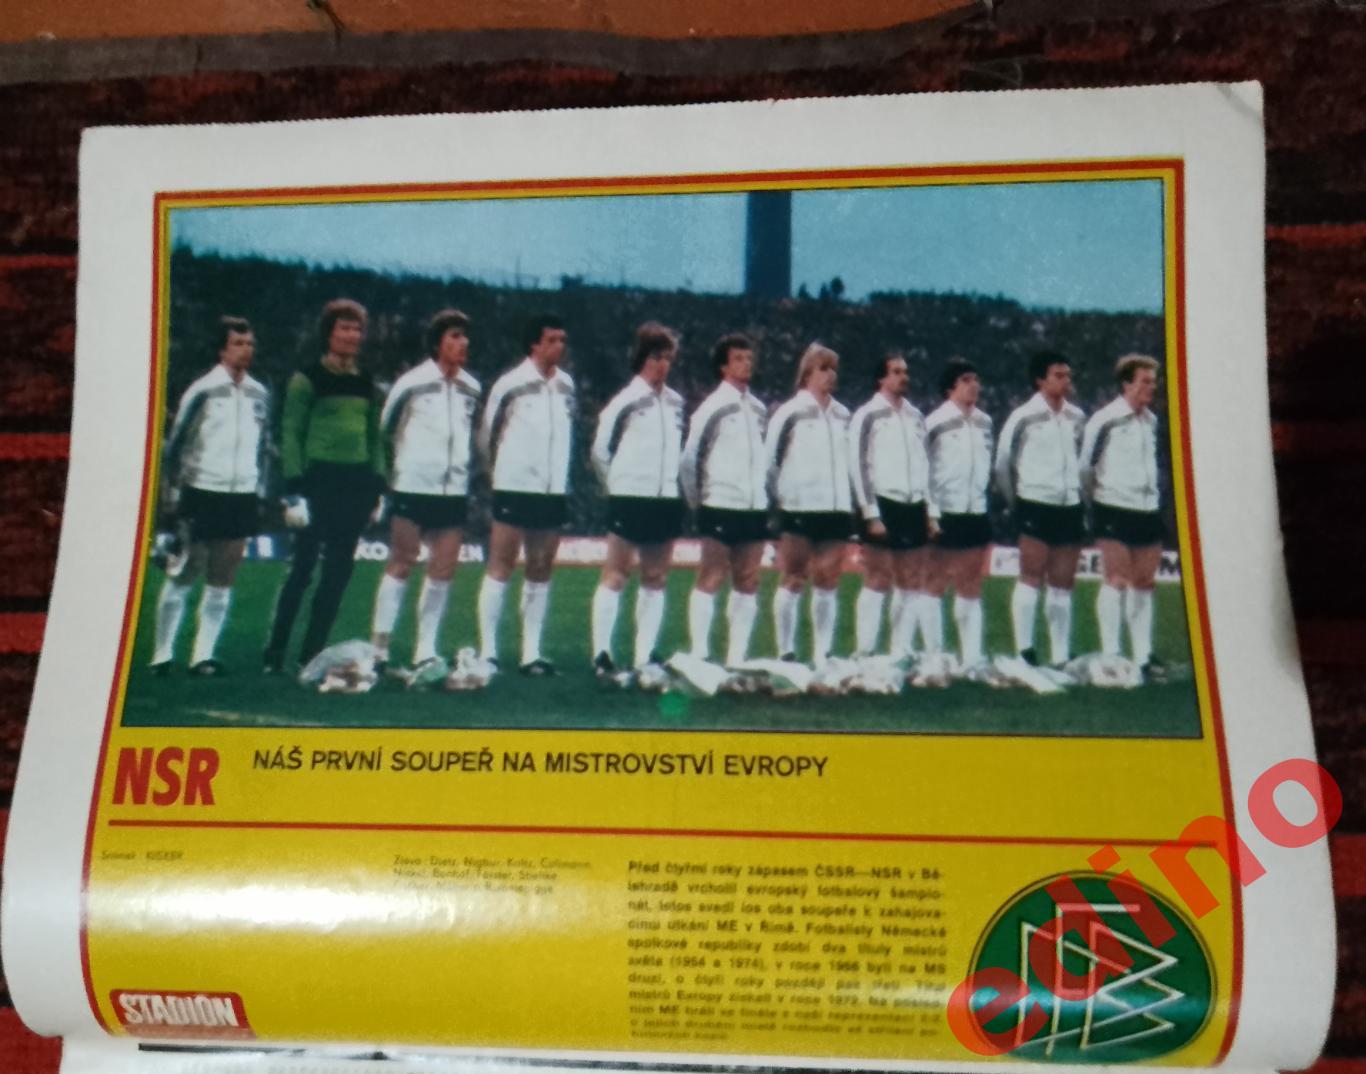 журнал Стадион(stadion) 1980 год Германия участникЕвро 80